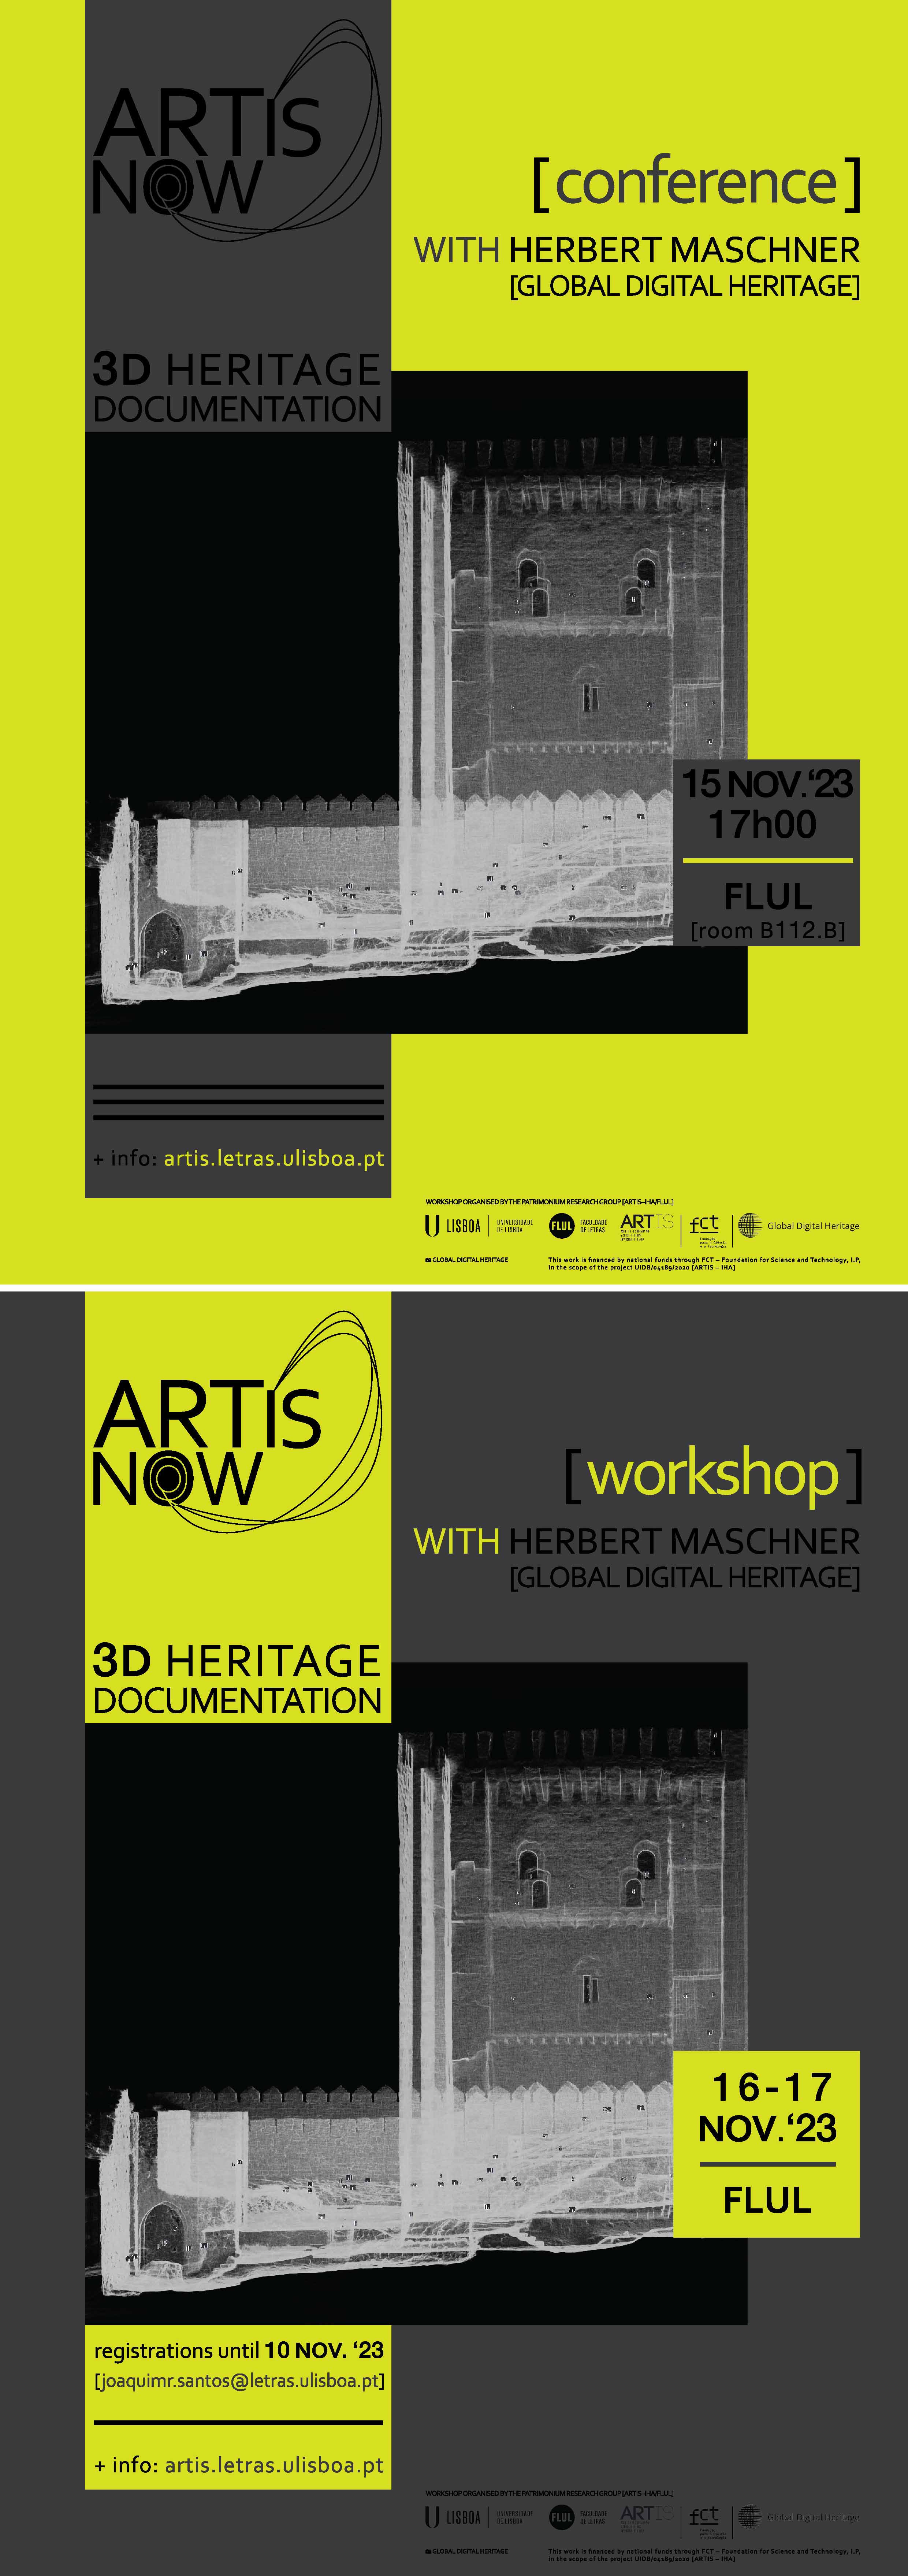 ARTIS NOW [CONFERENCE AND WORKSHOP] | 3D HERITAGE DOCUMENTATION